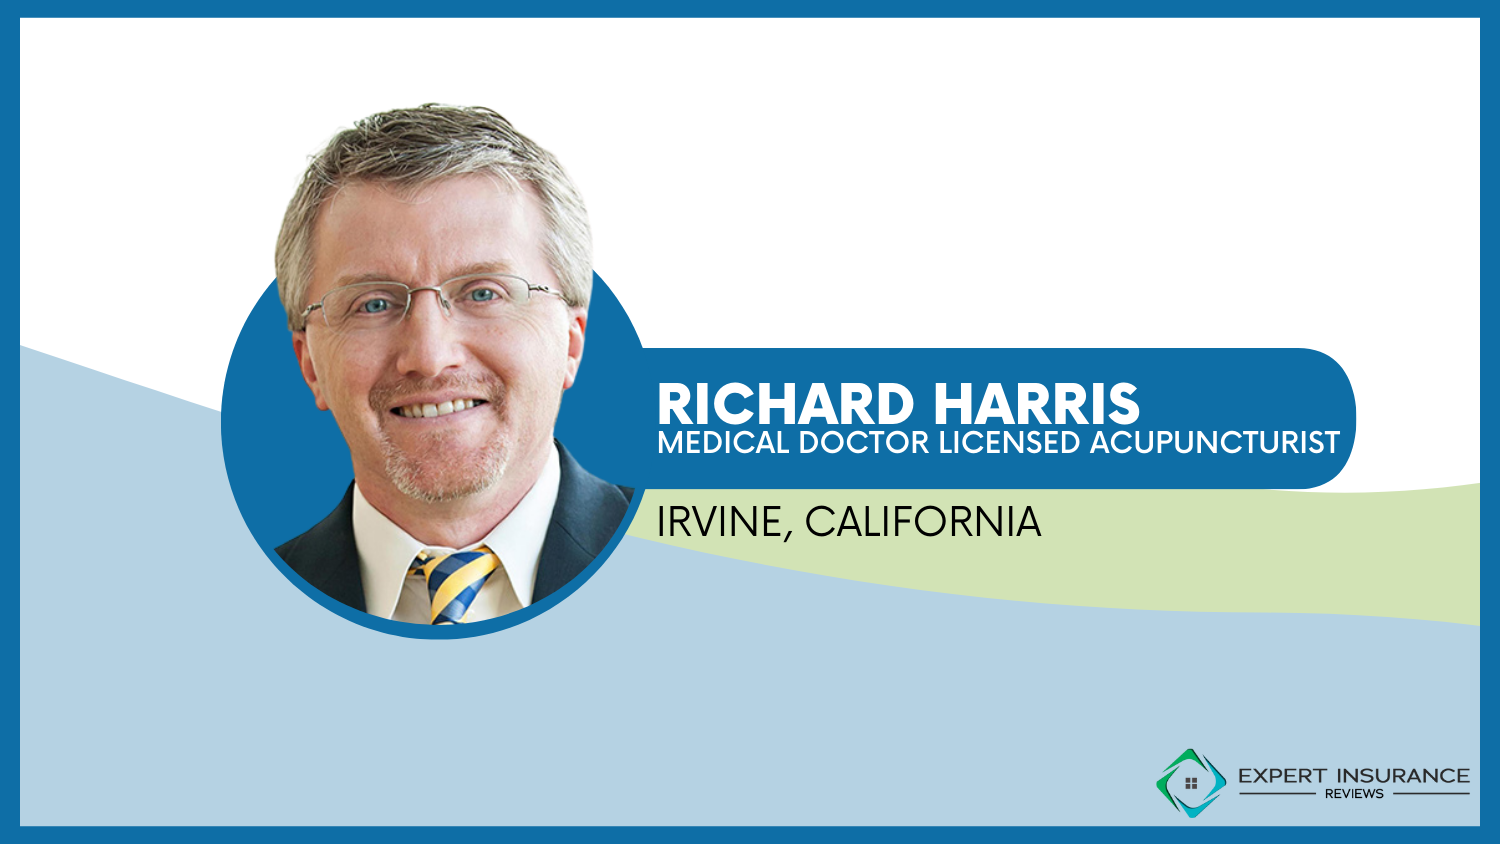 Best Acupuncturists That Accept Medicare: Richard Harris